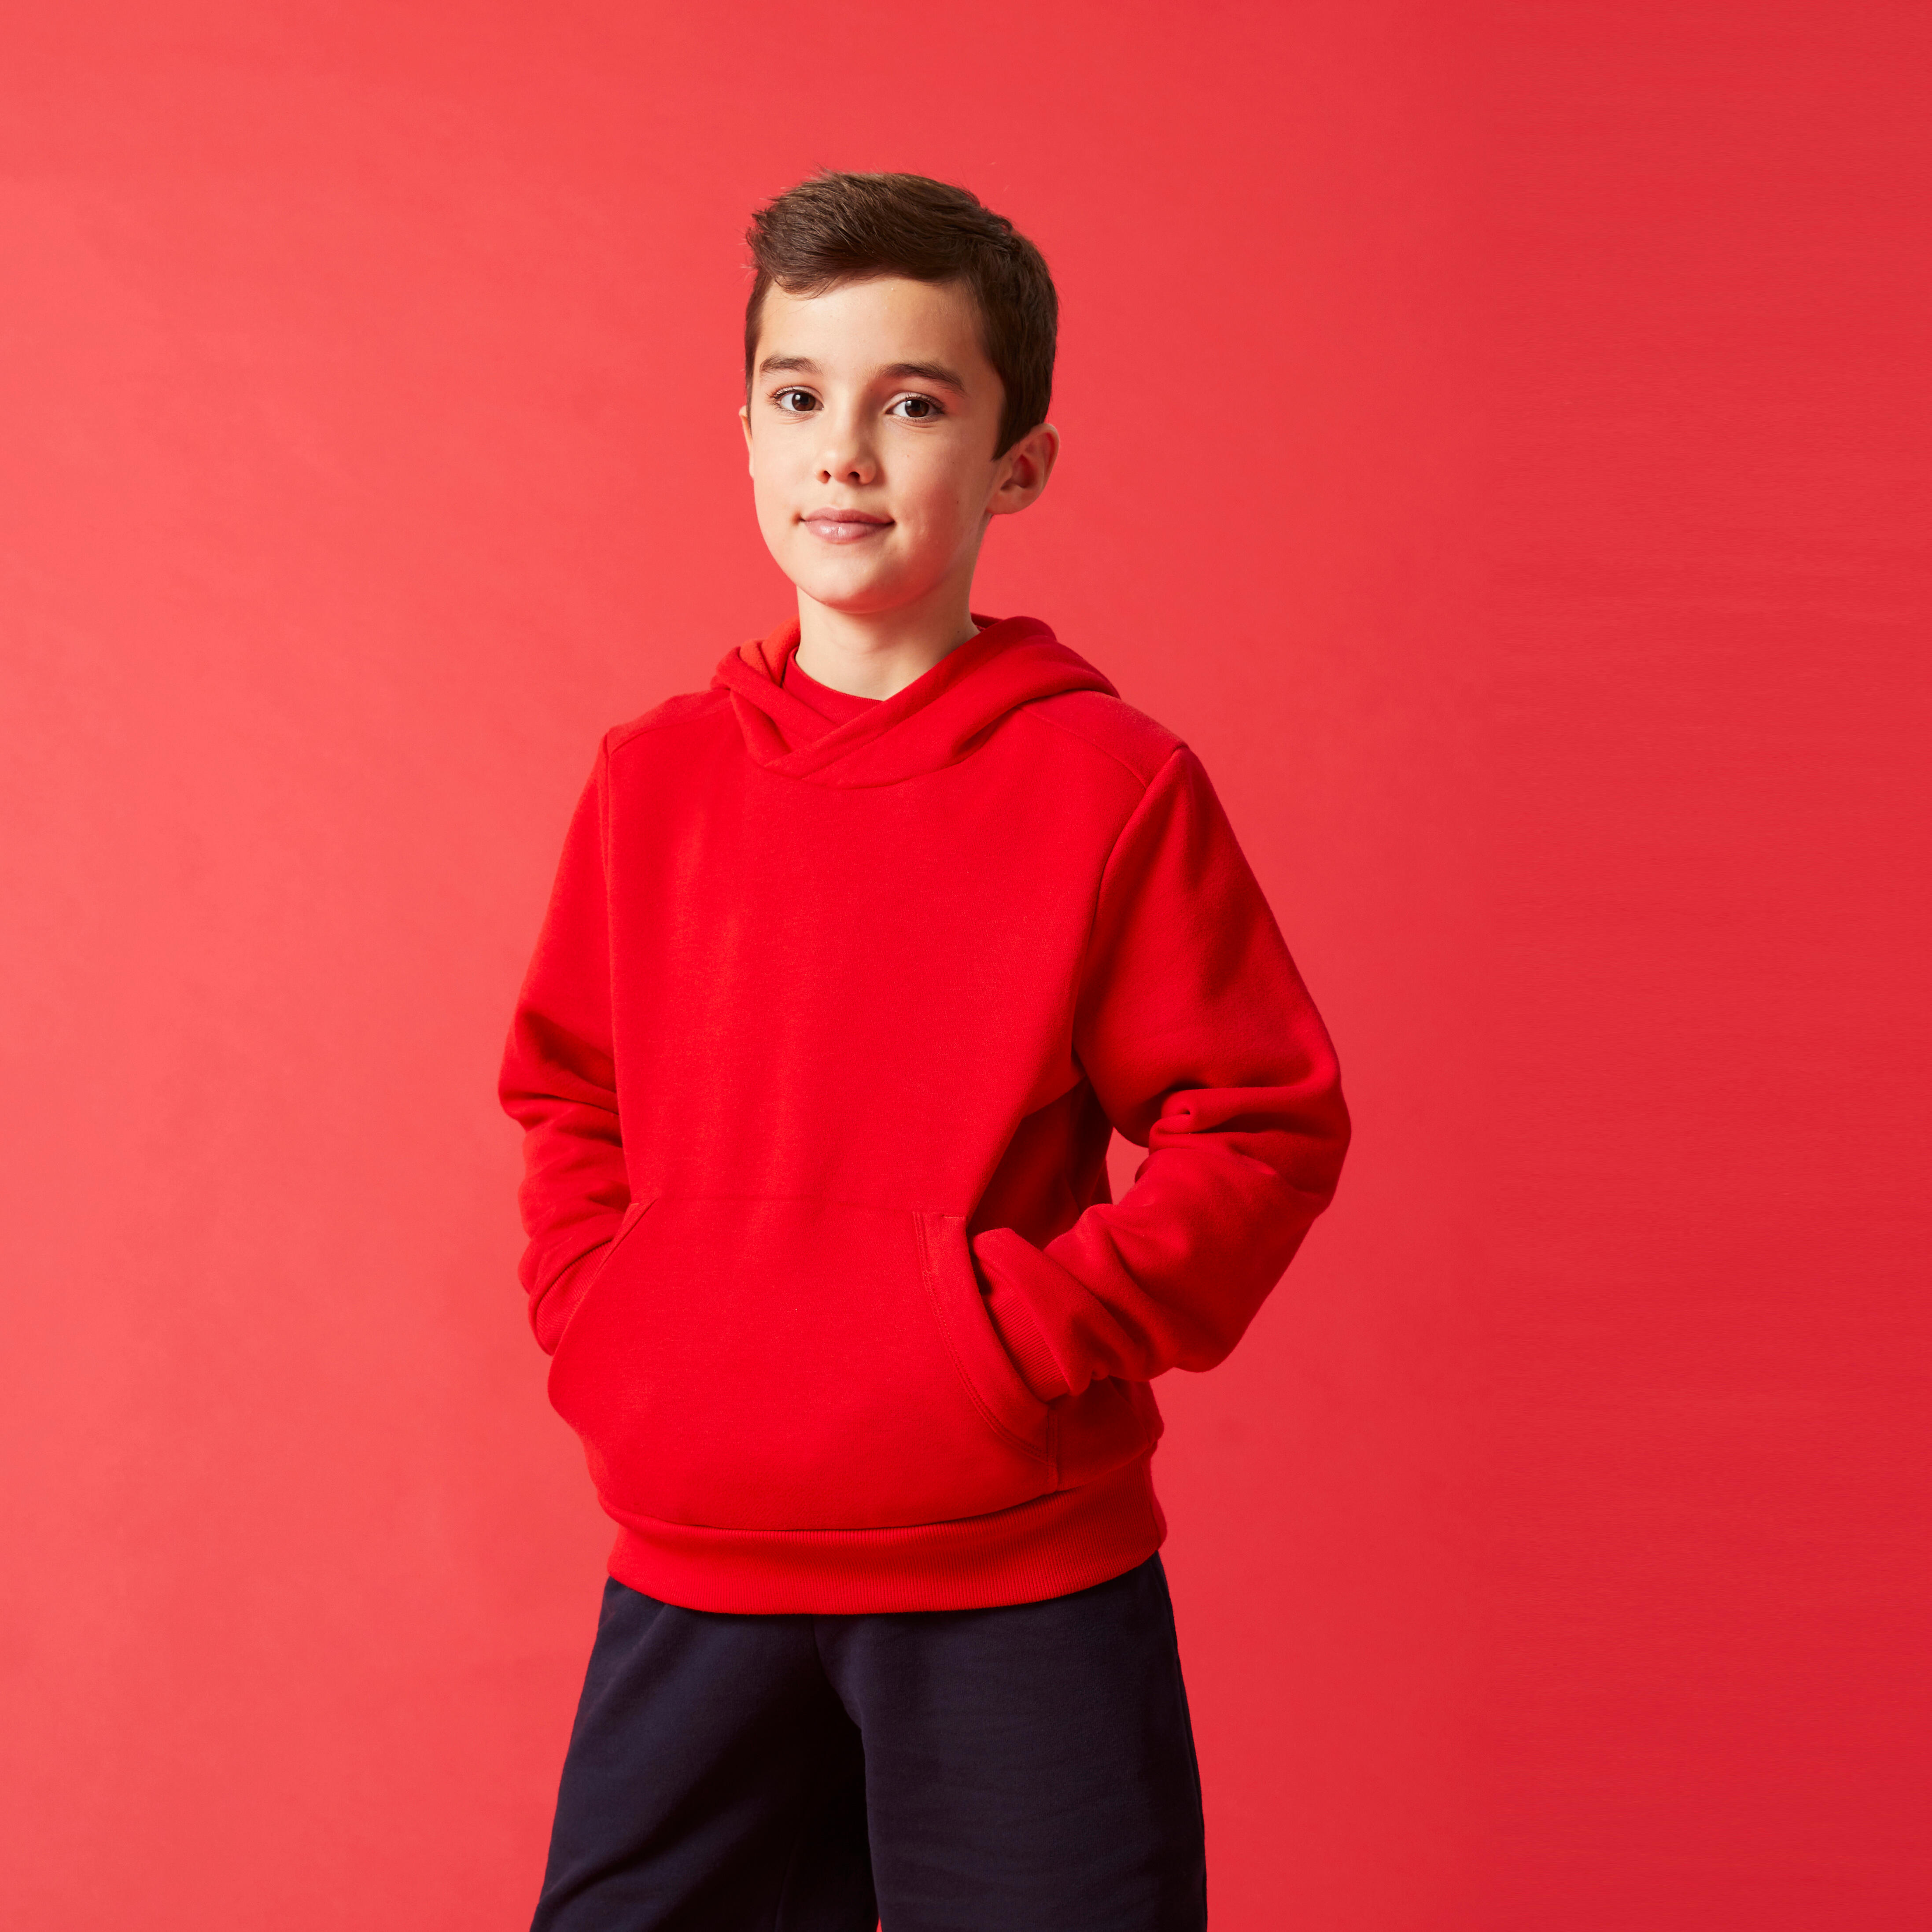 Kids Girls Boys Sweat Shirt Tops Plain Red Hooded Jumpers Hoodies Age 2-13  Years